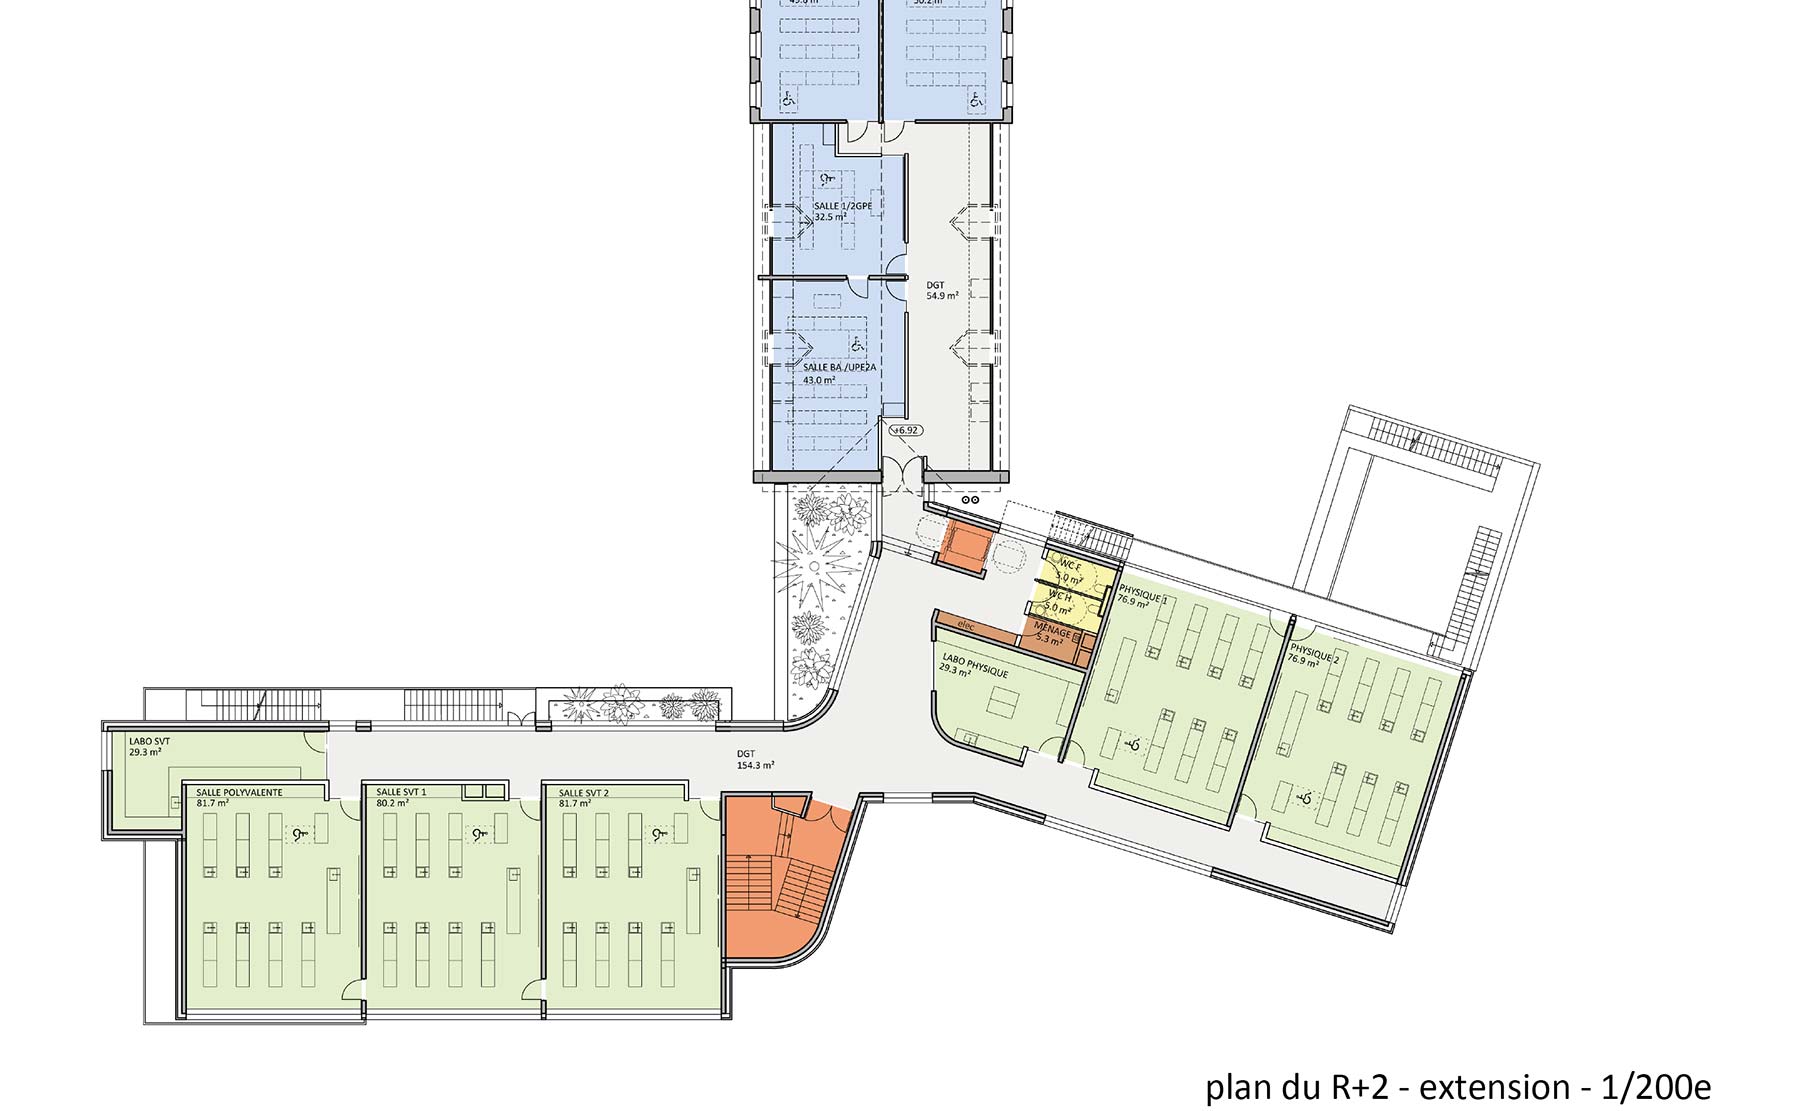 R+2 - Extension et restructuration du Collège Kennedy / Mulhouse